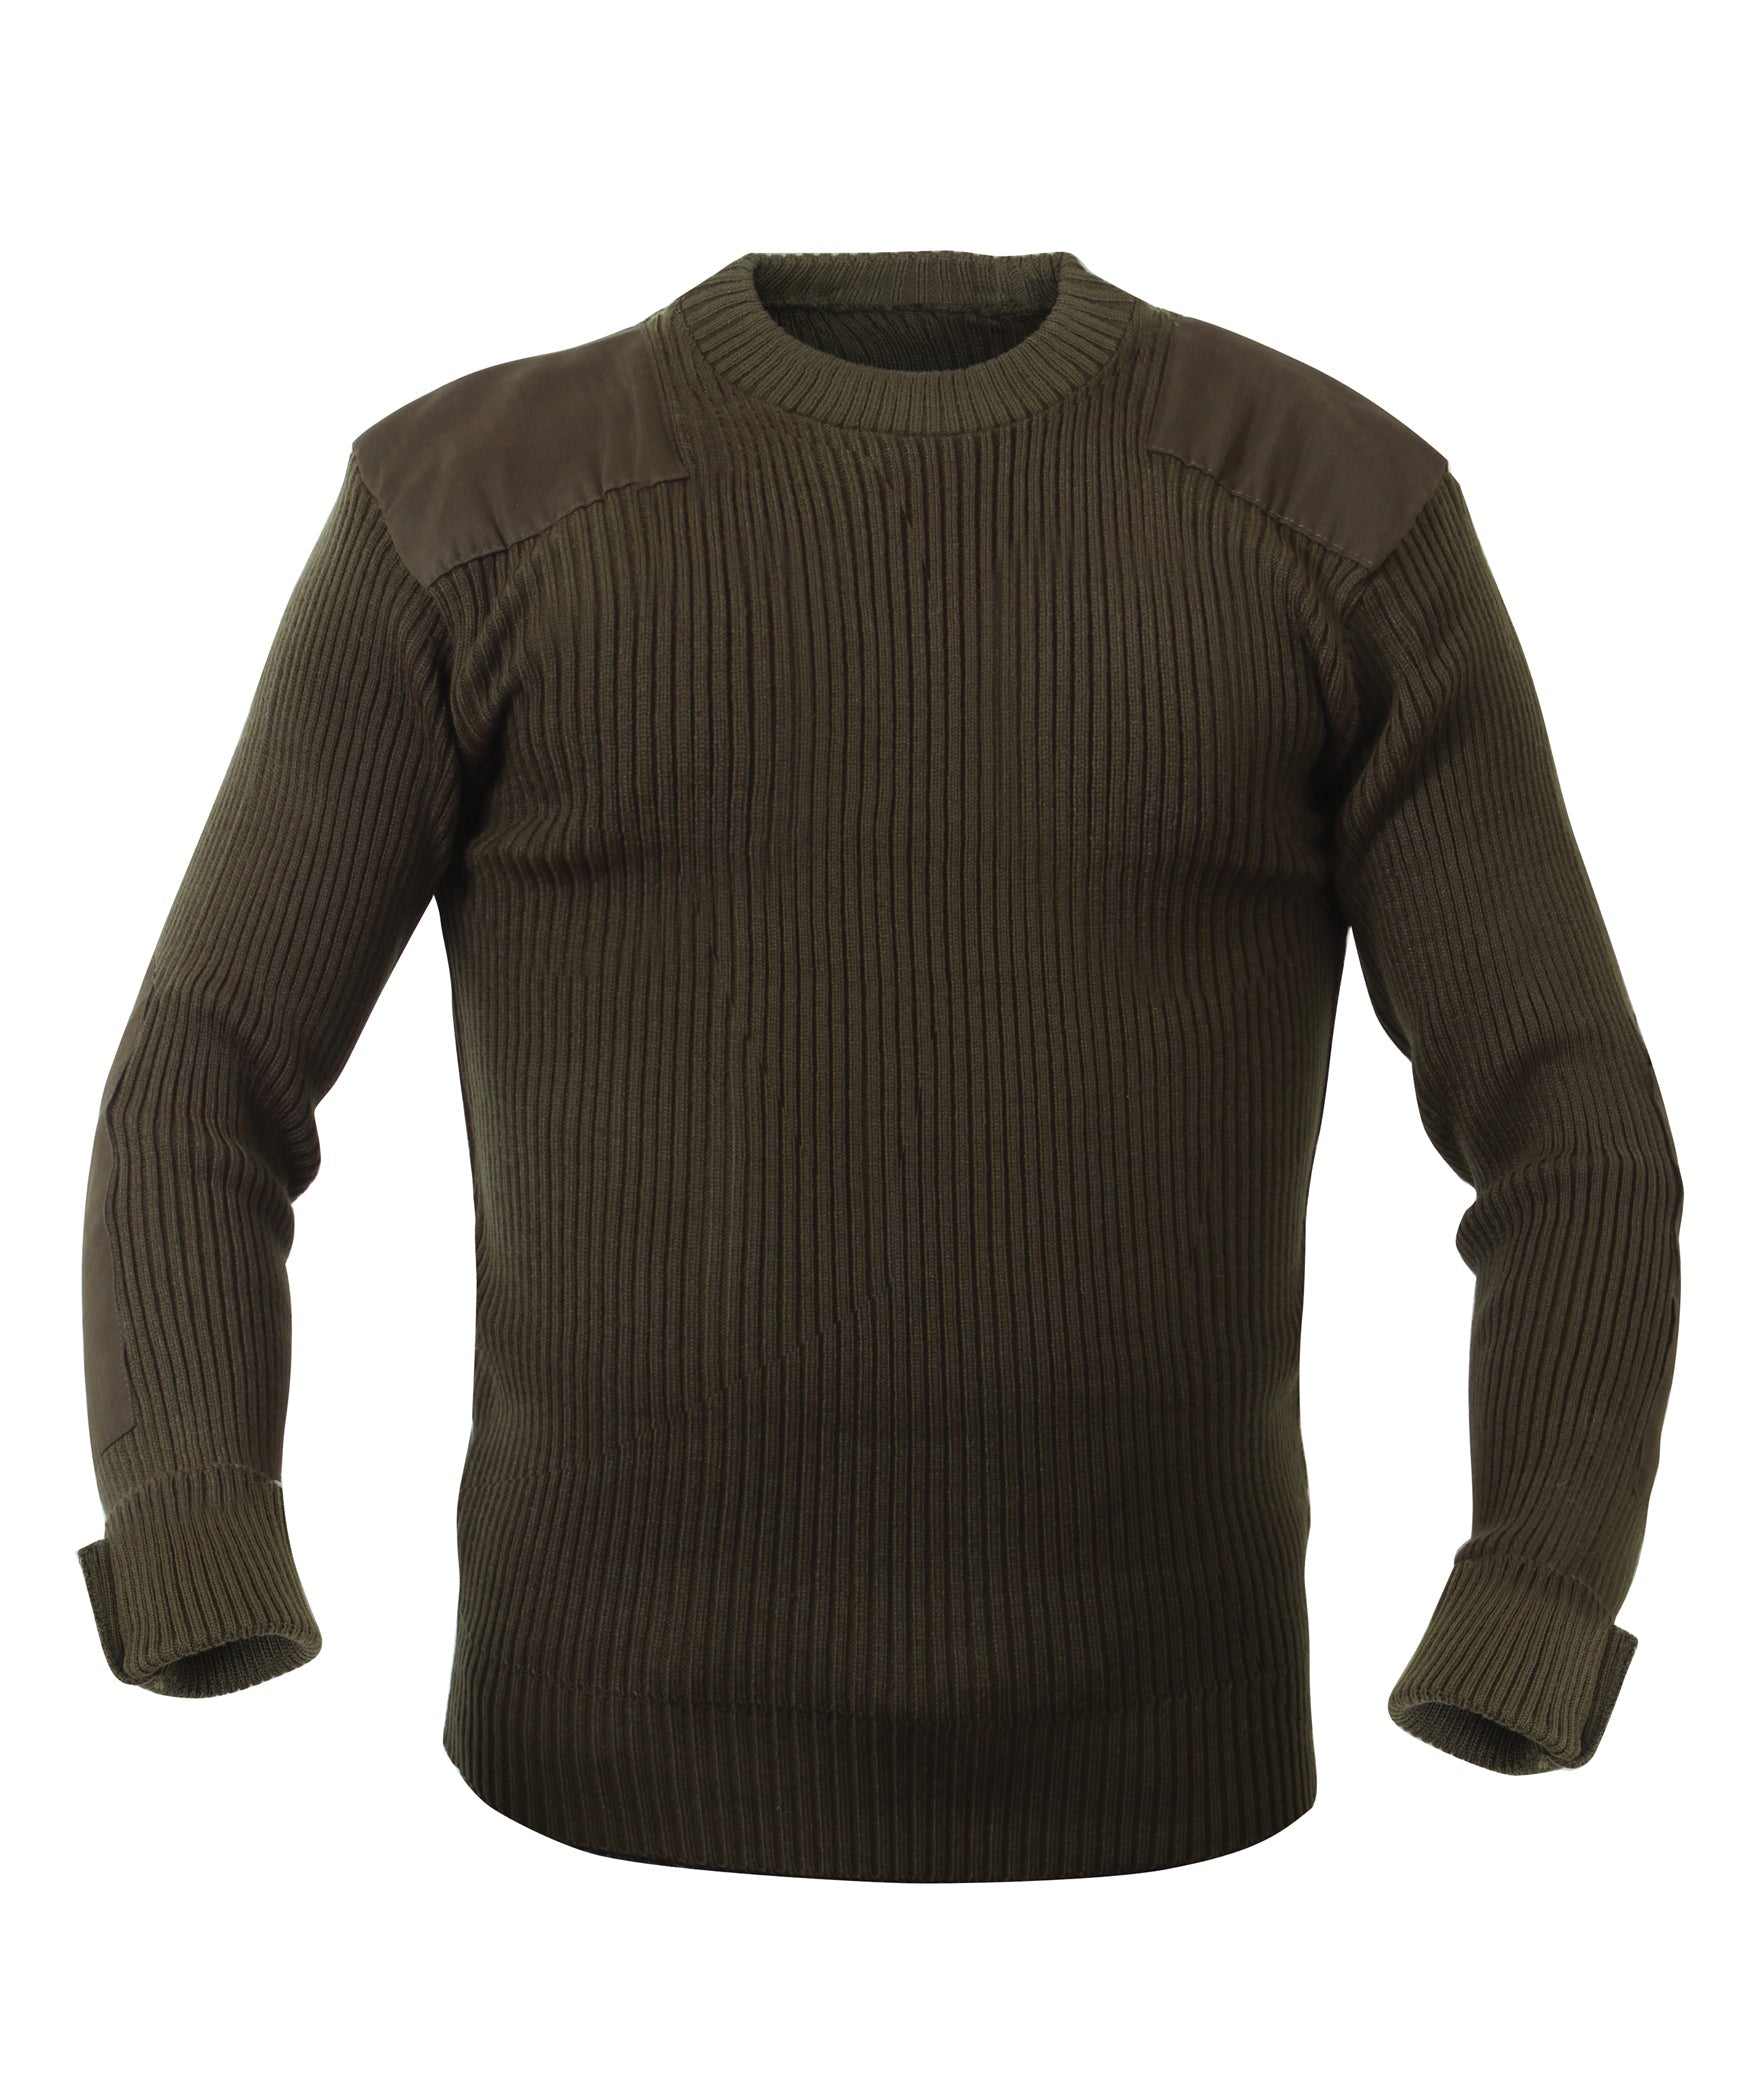 Rothco GI Style Commando Sweater Olive Drab (6347)